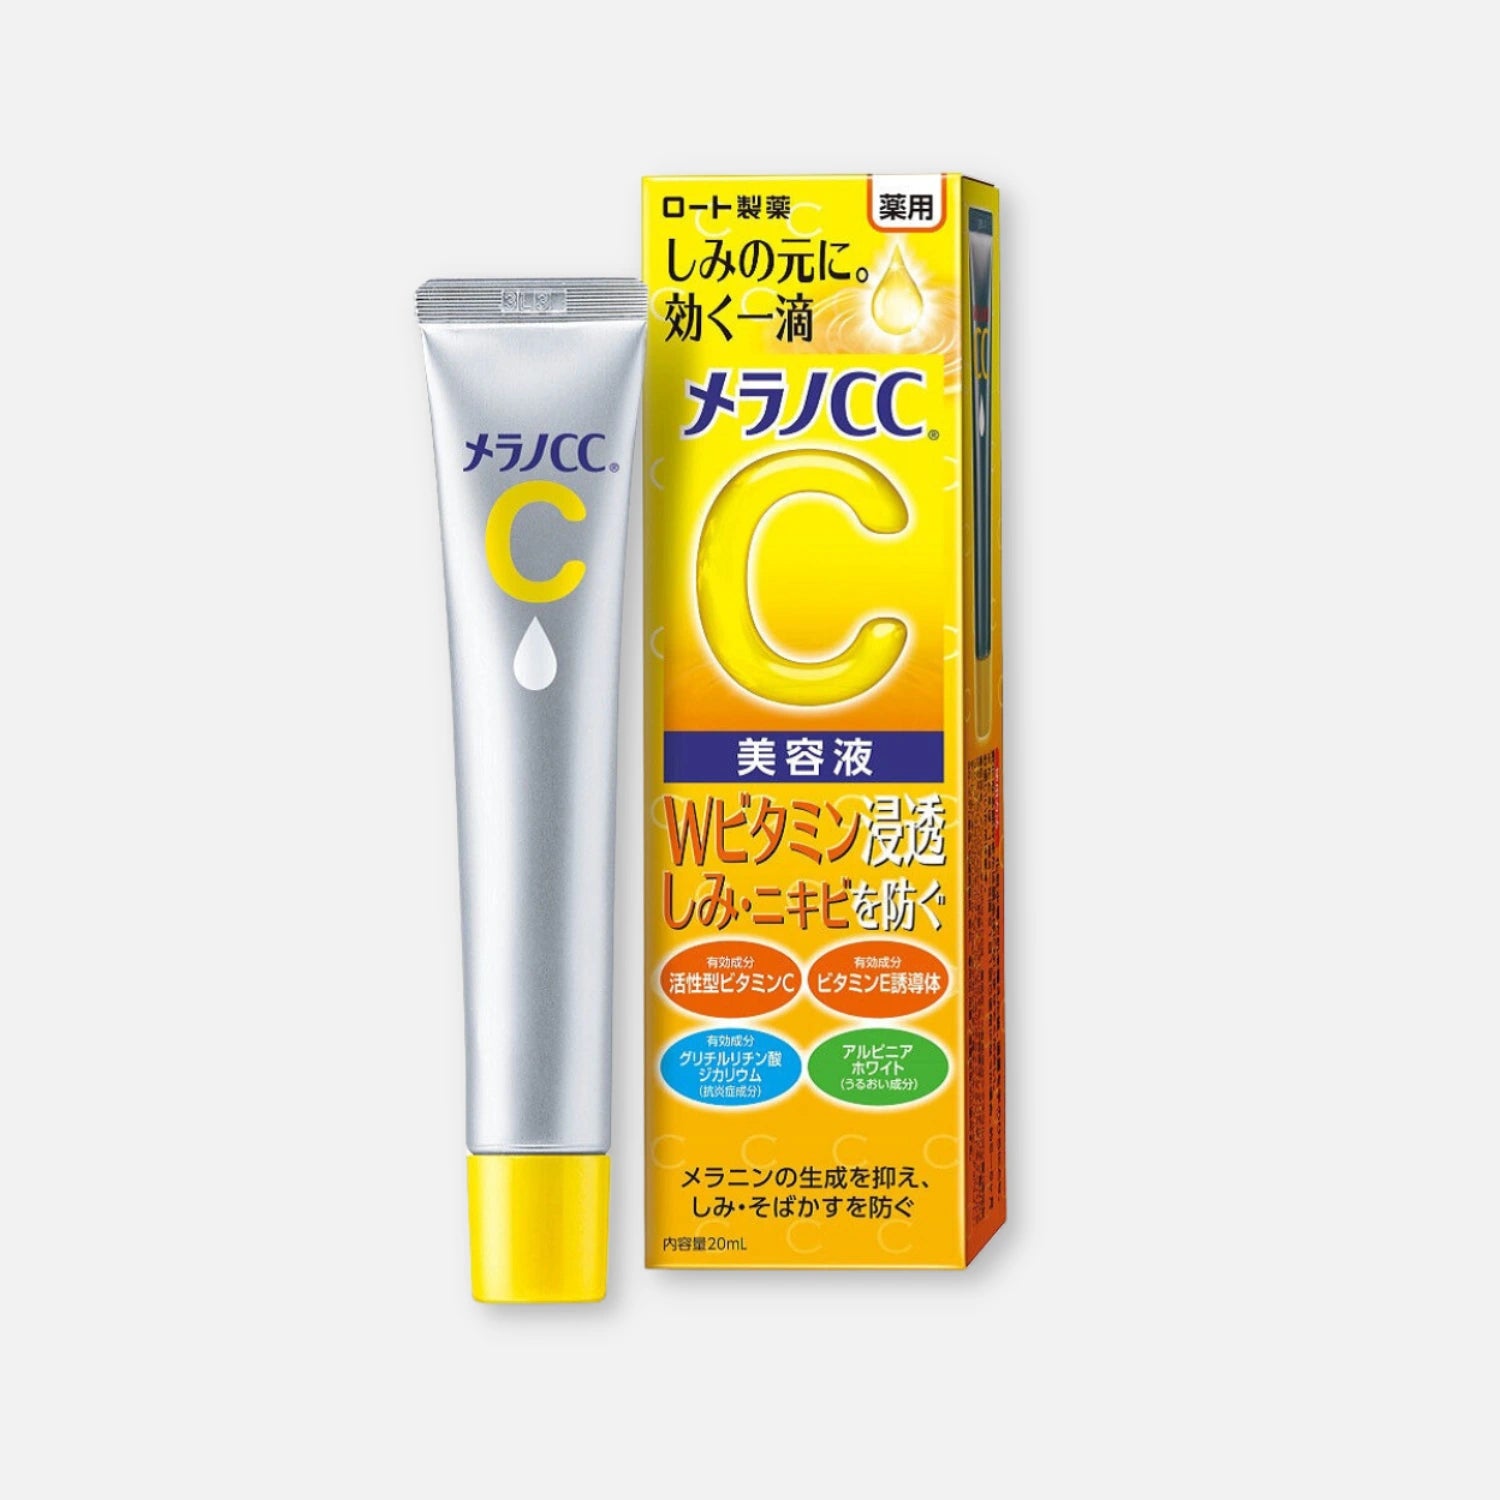 Melano CC Vitamin C Essence 20ml - Buy Me Japan